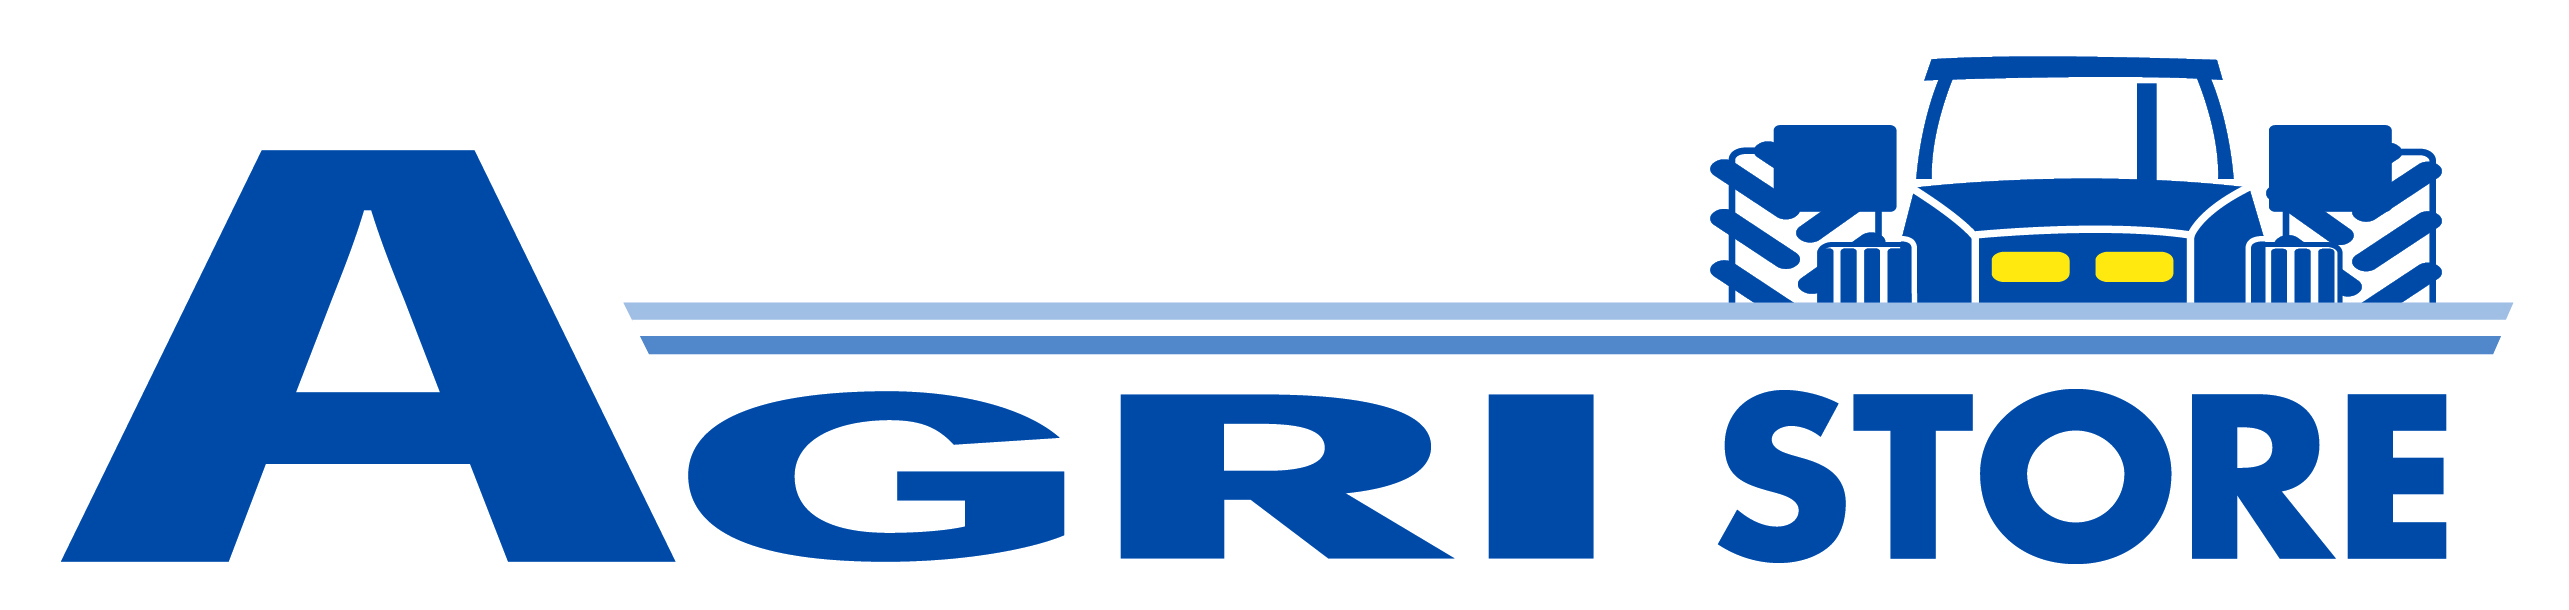 Logo Agristore